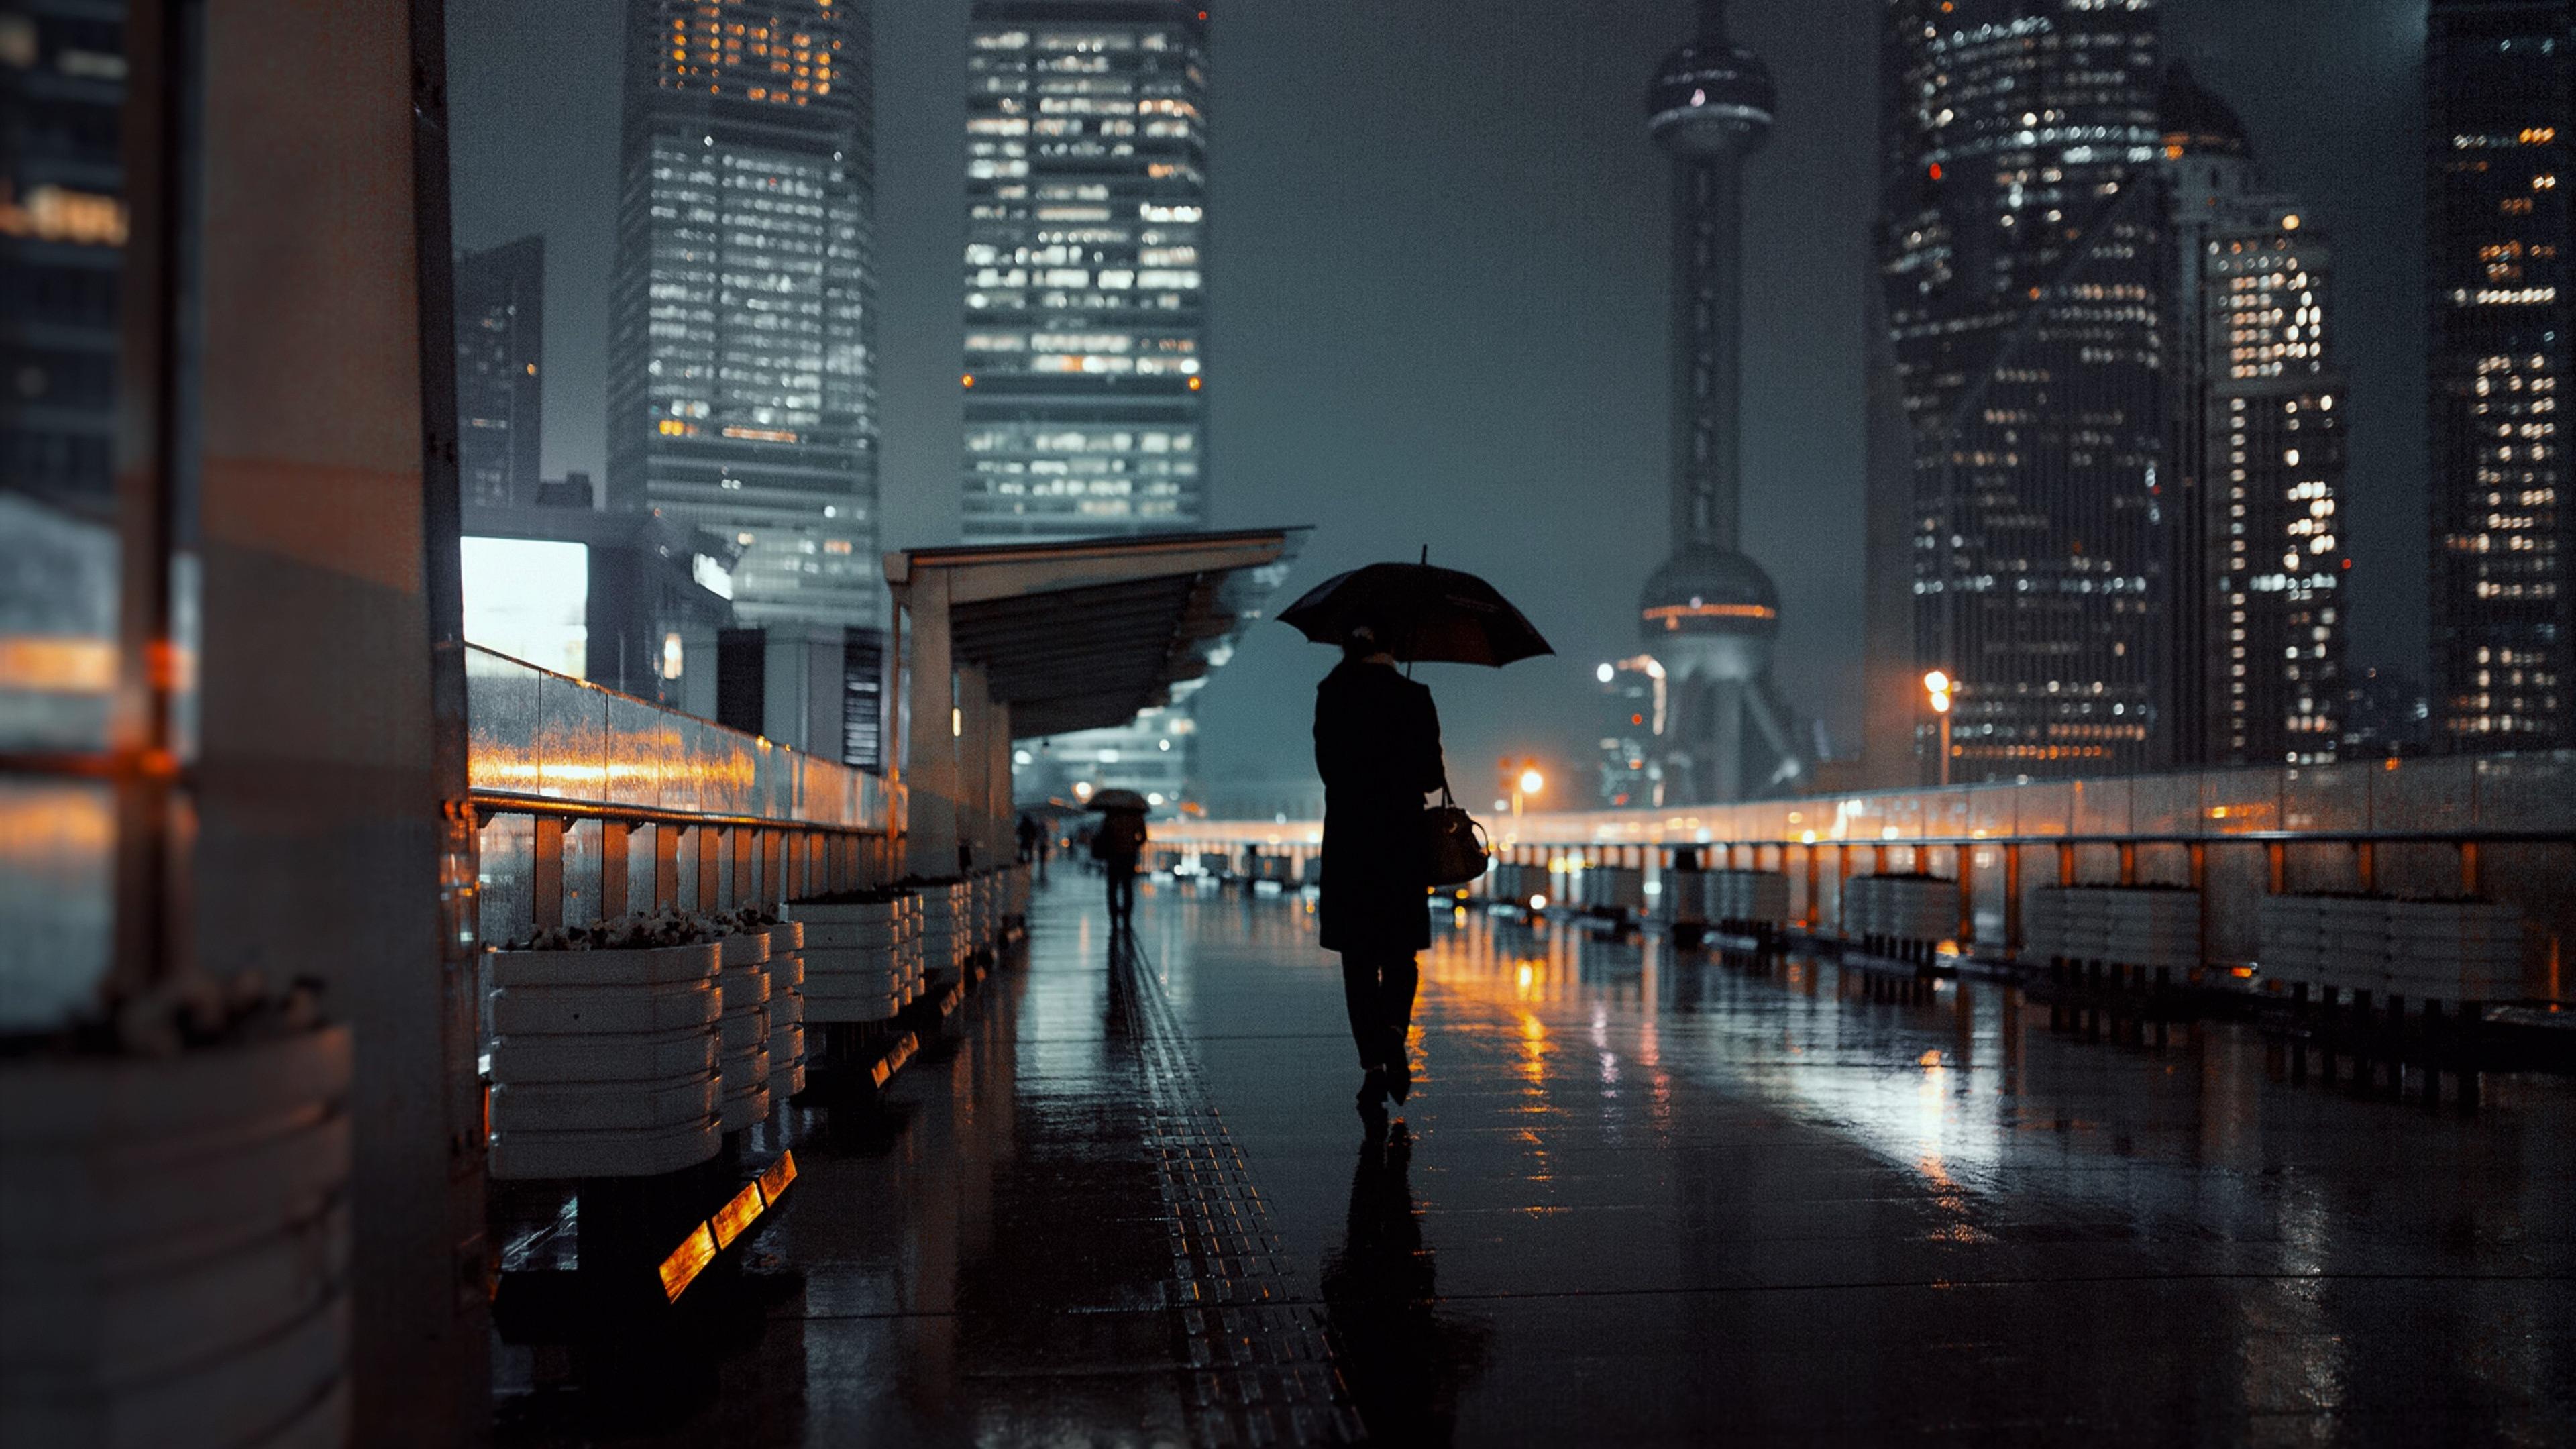 rain city time machine